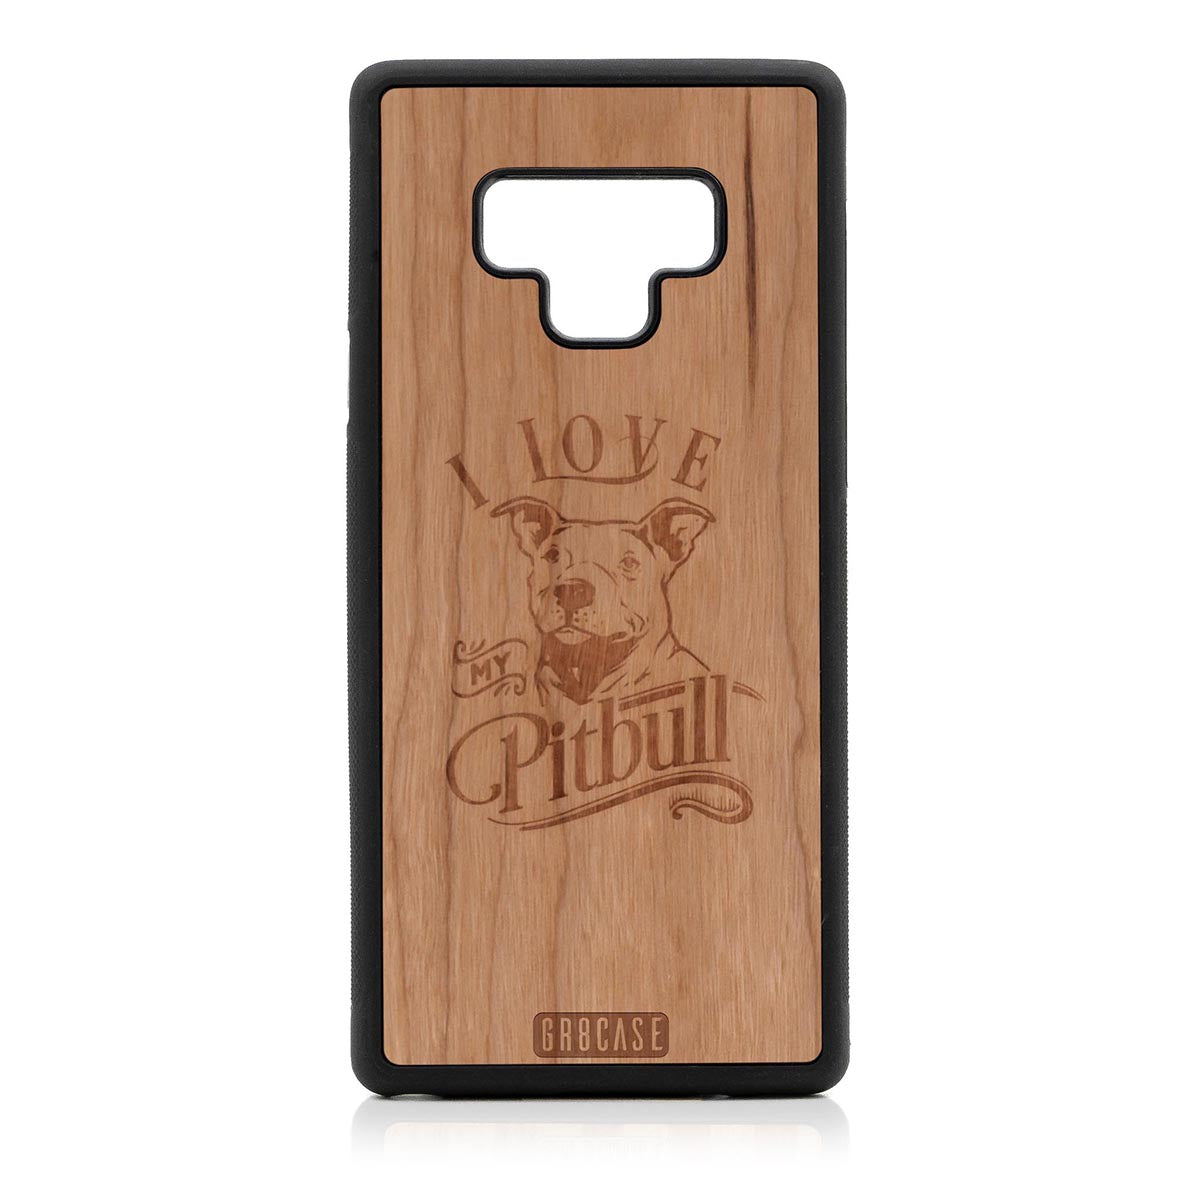 I Love My Pitbull Design Wood Case Samsung Galaxy Note 9 by GR8CASE